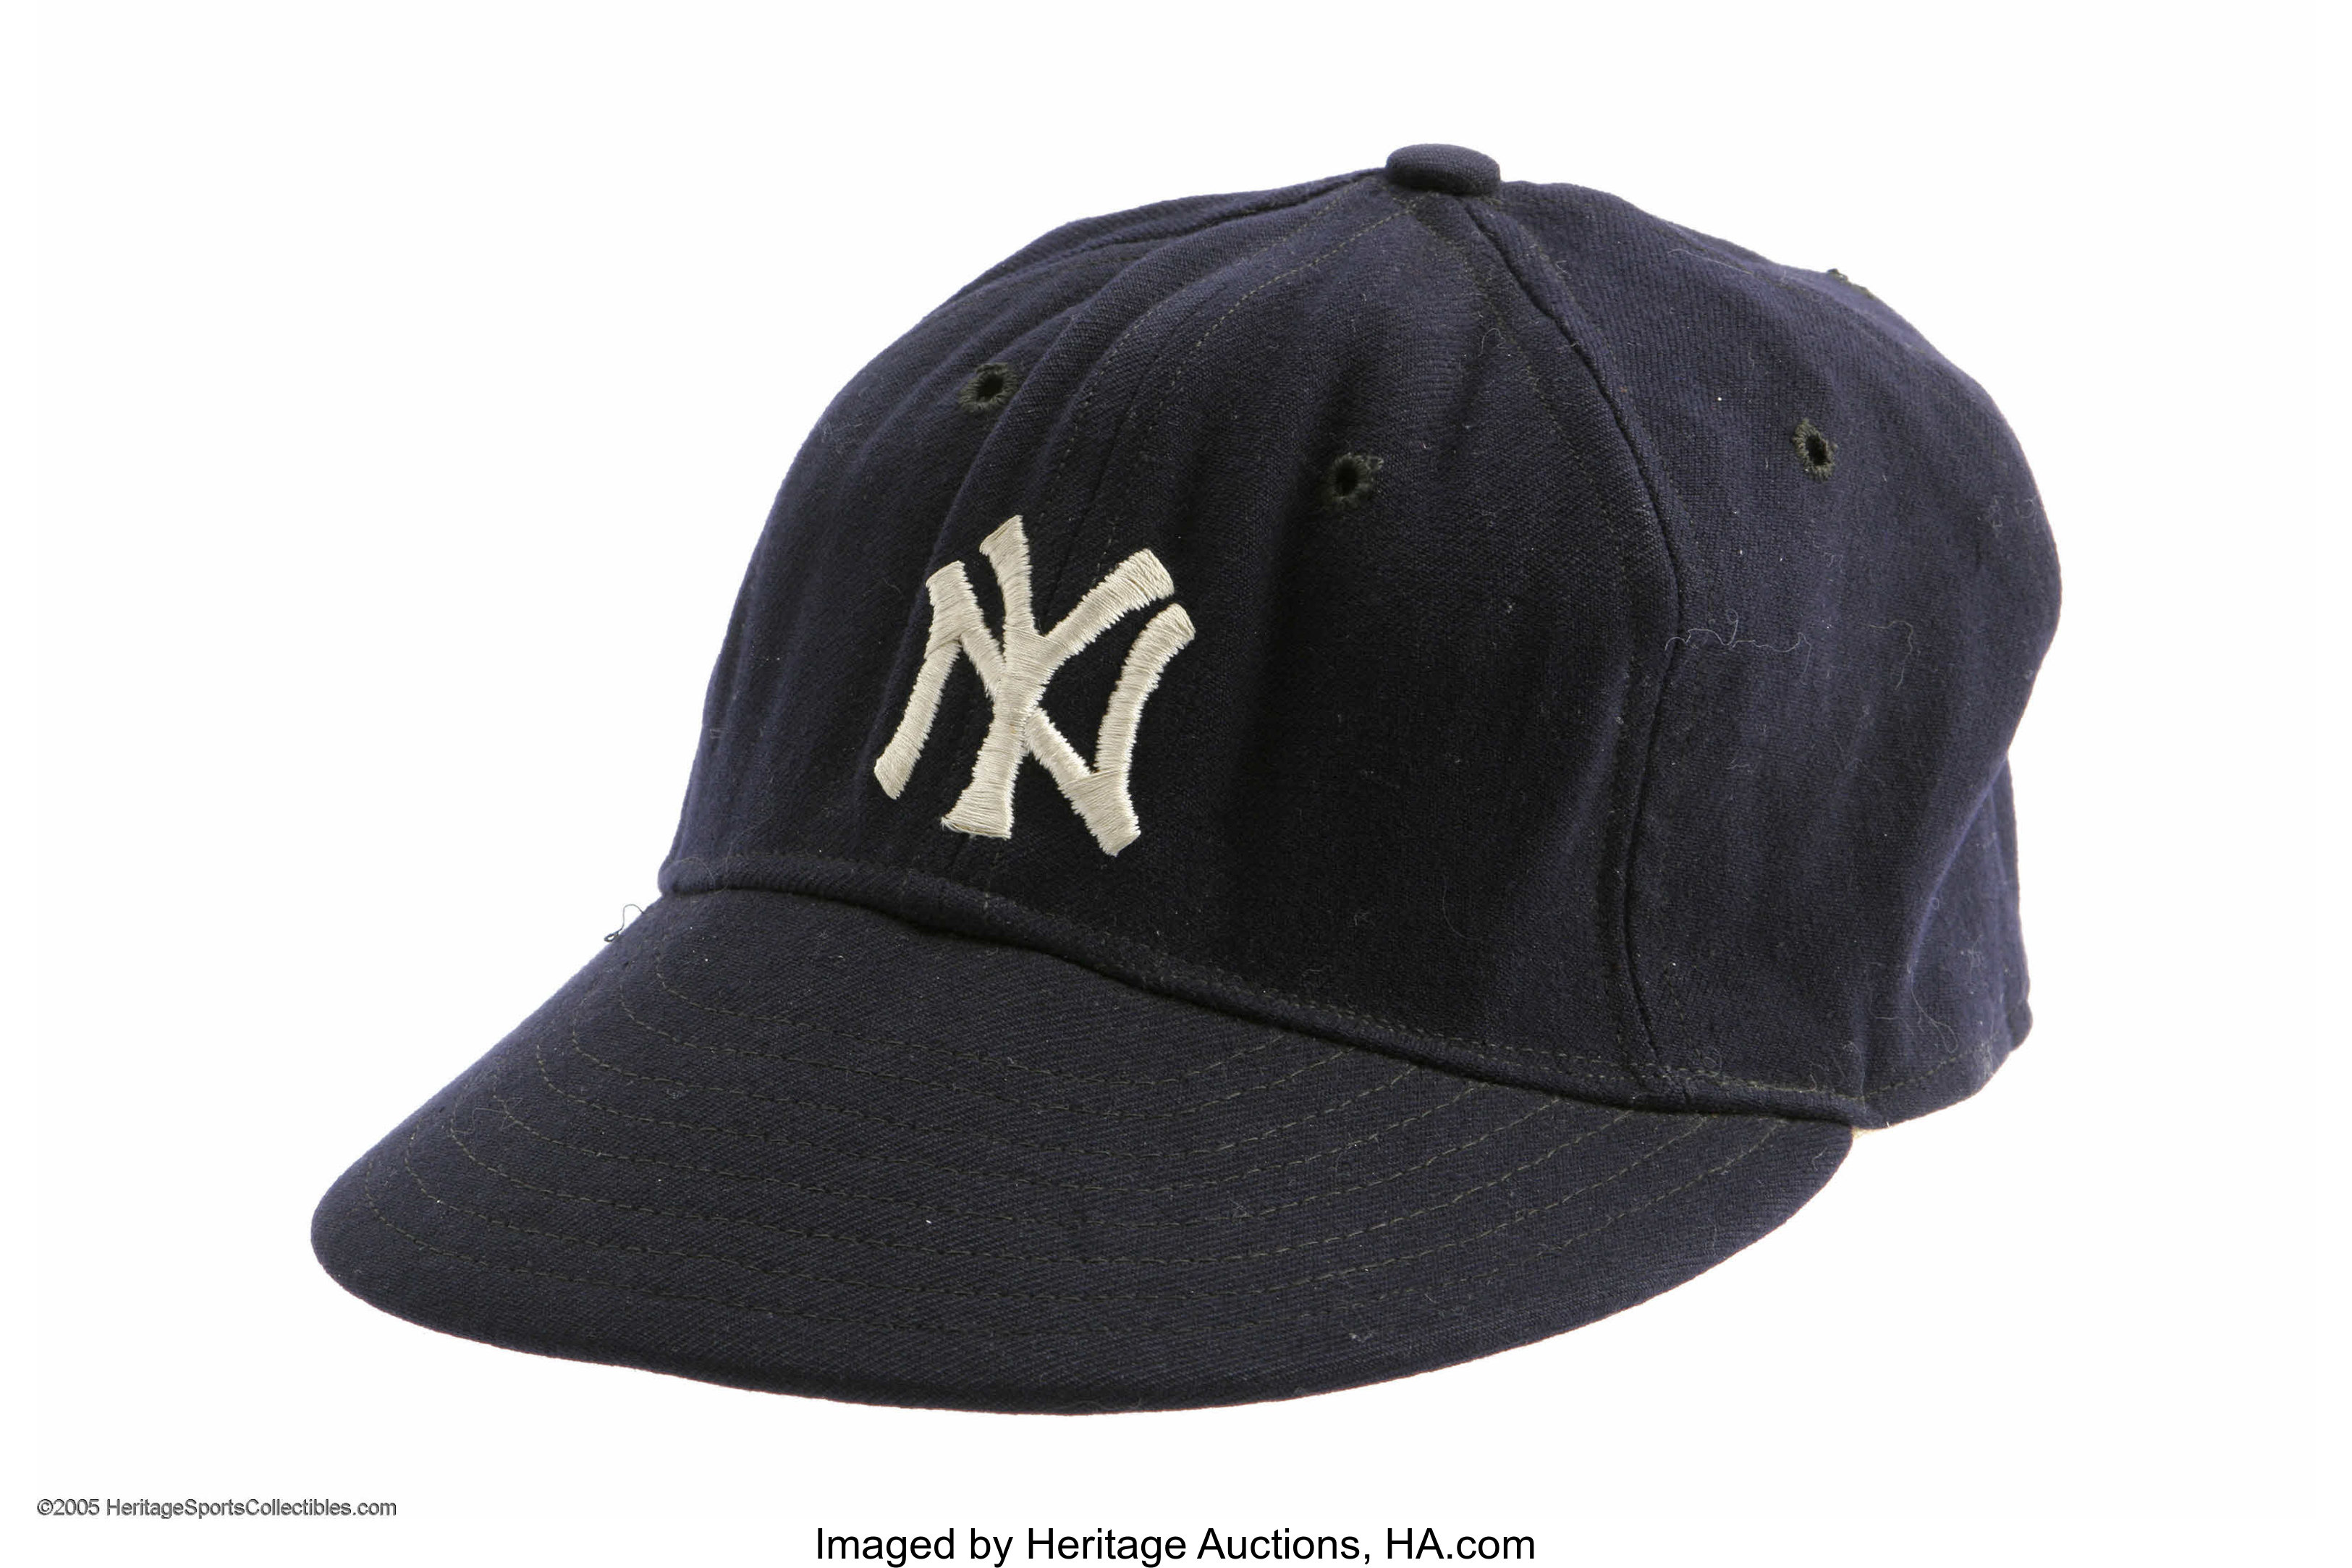 Yankees™ and GG print baseball hat